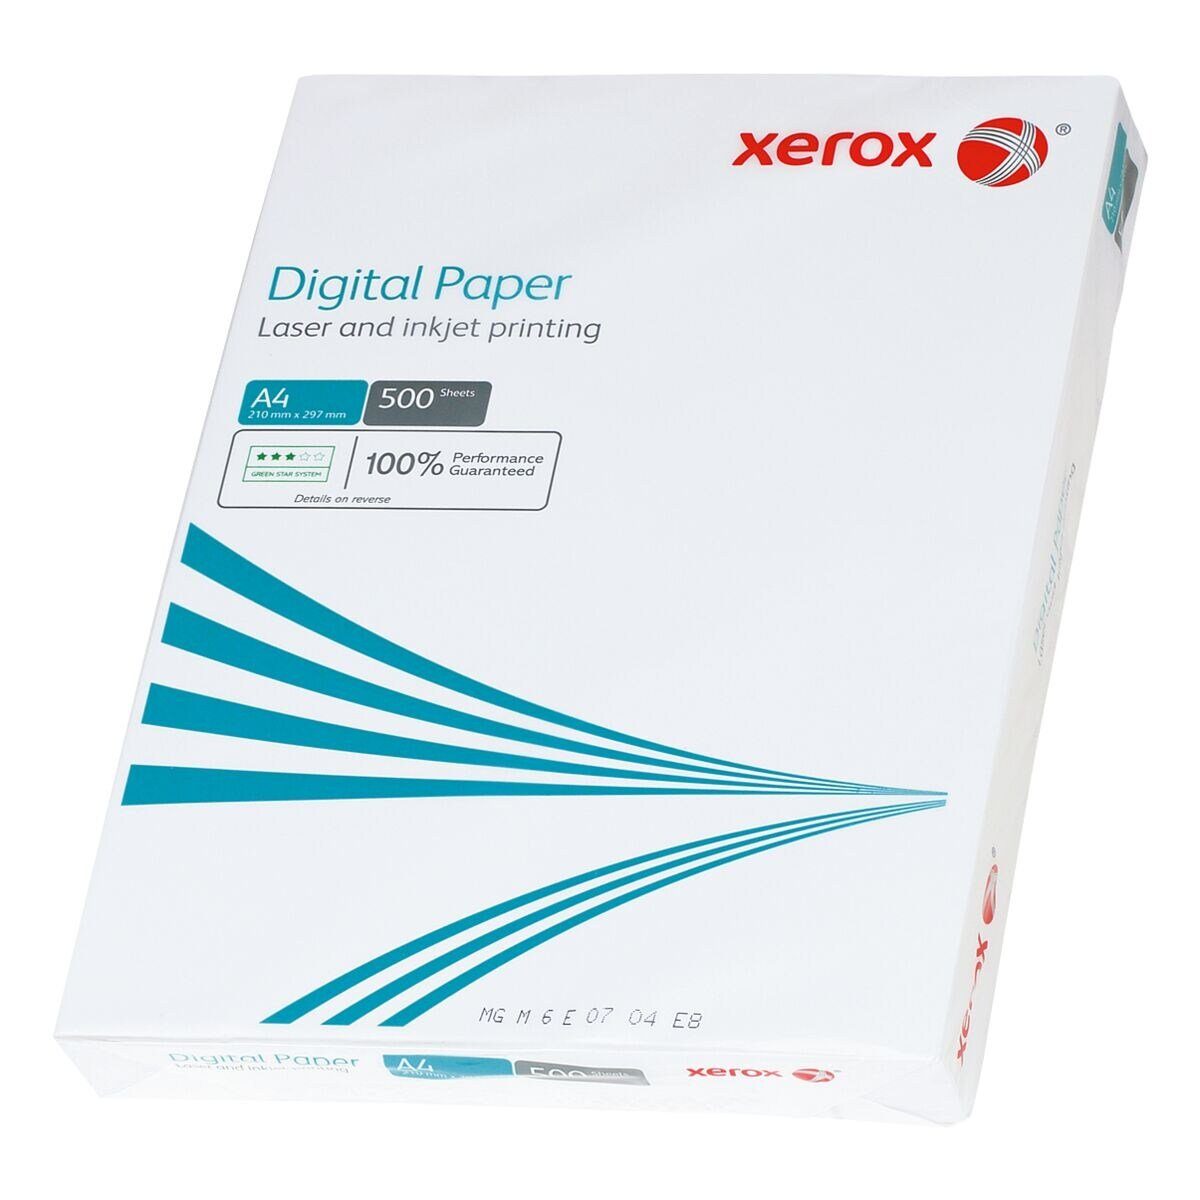 Xerox Druckerpapier Digital Plus, Format DIN A4, 75 g/m², 161 CIE, 500 Blatt